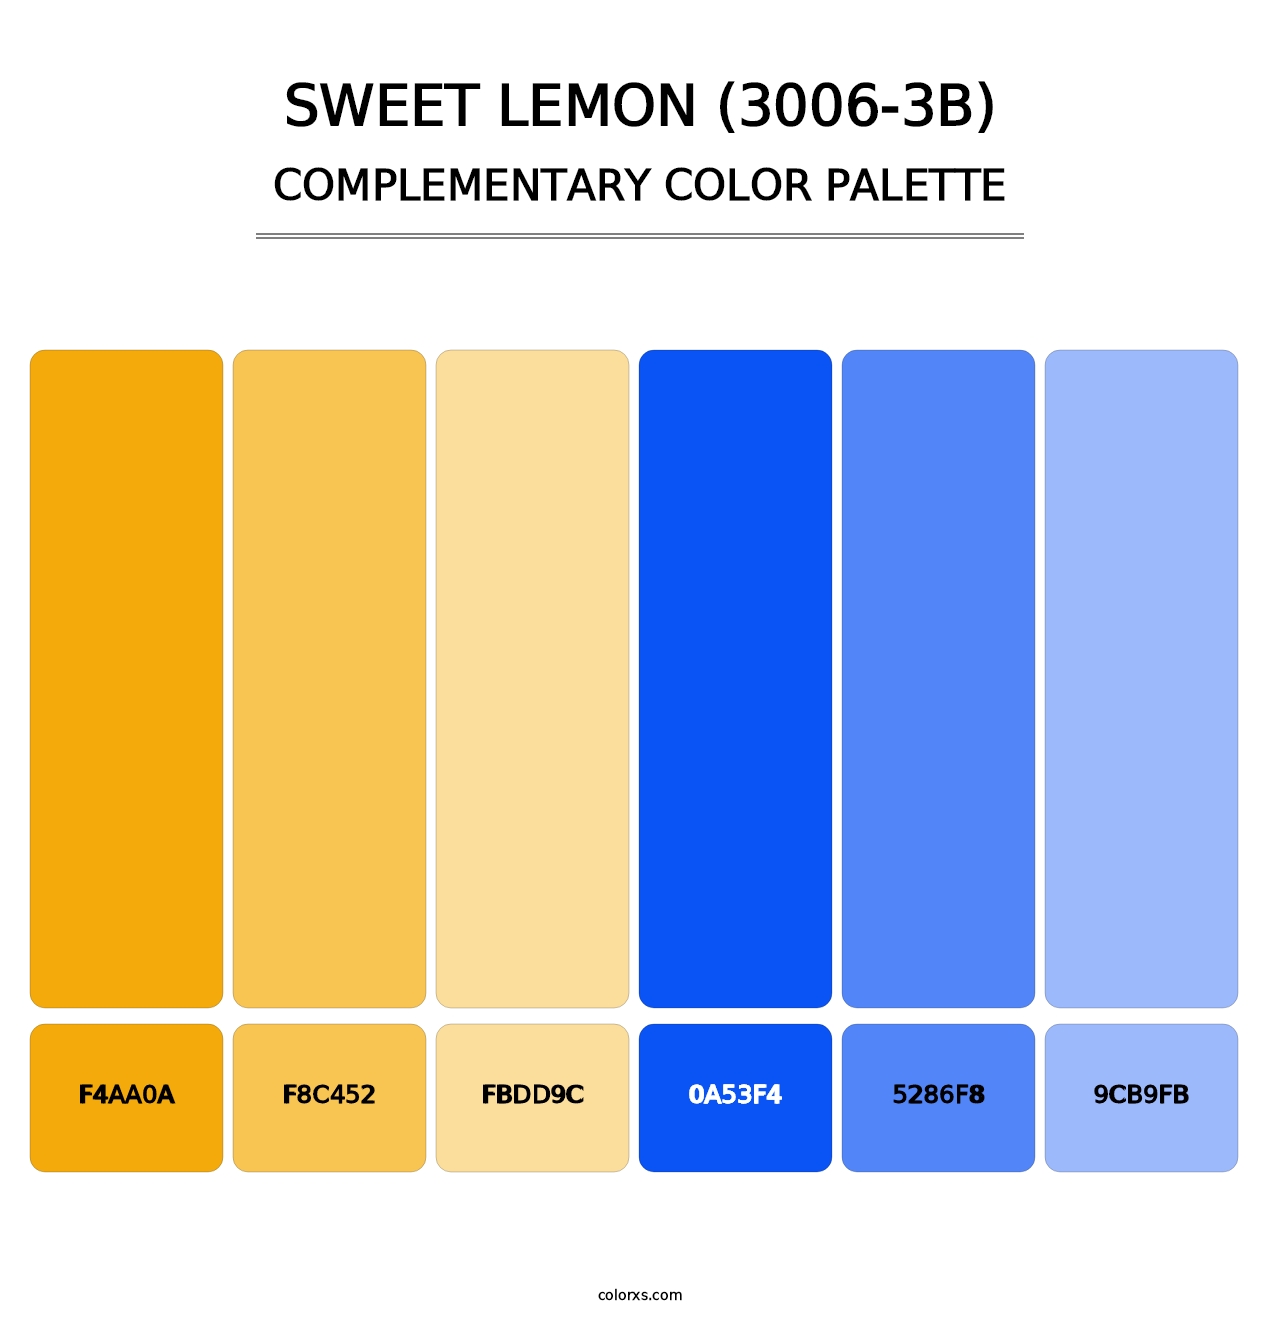 Sweet Lemon (3006-3B) - Complementary Color Palette